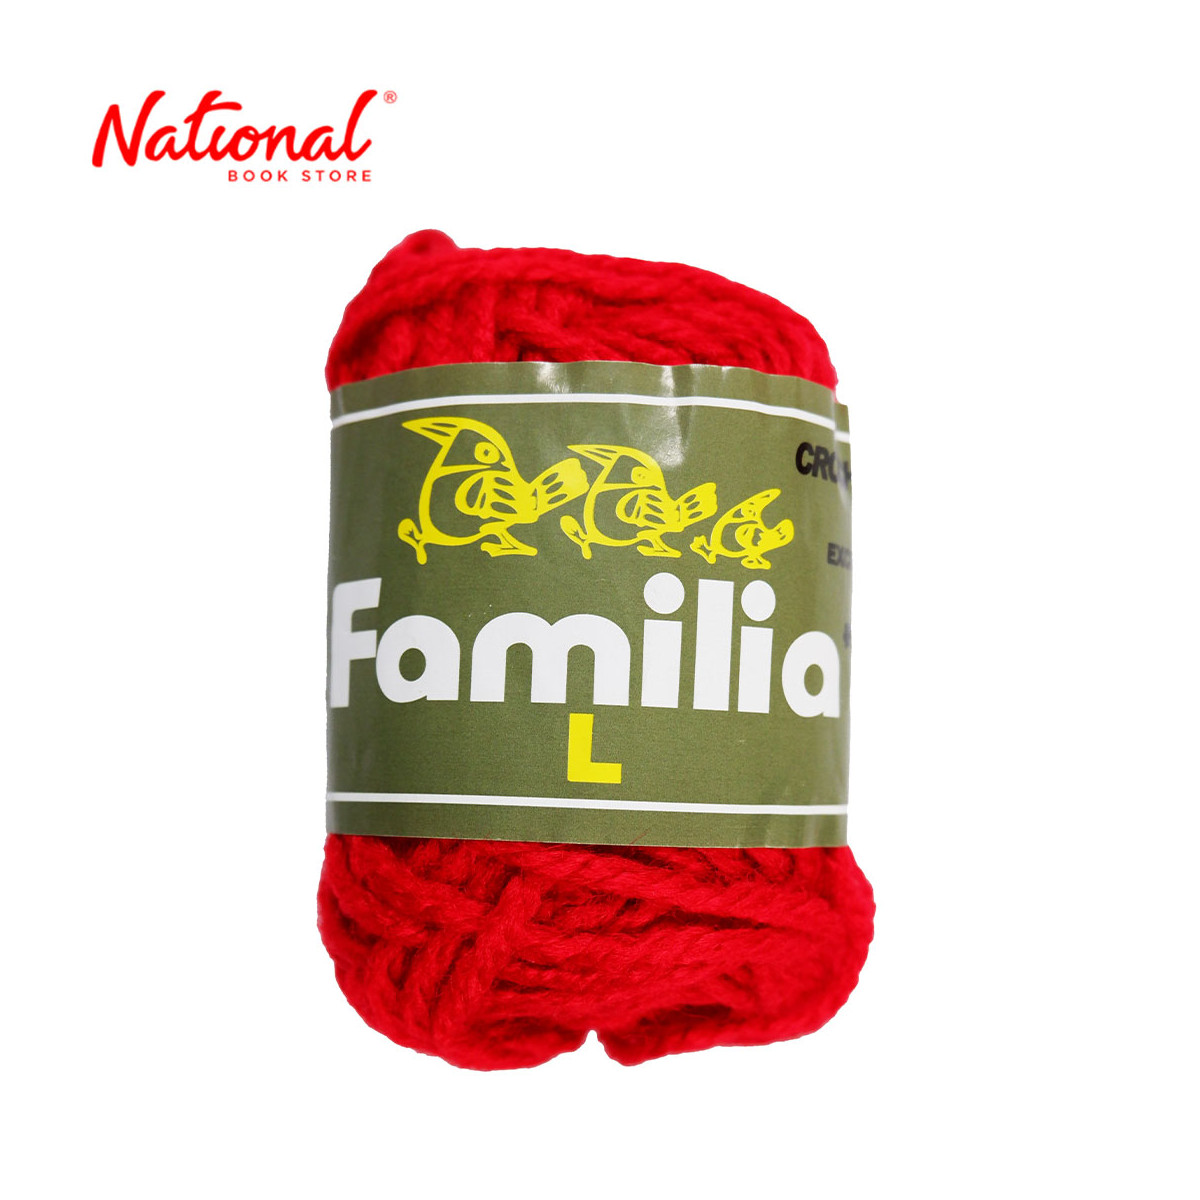 Familia Yarn - Sewing Supplies